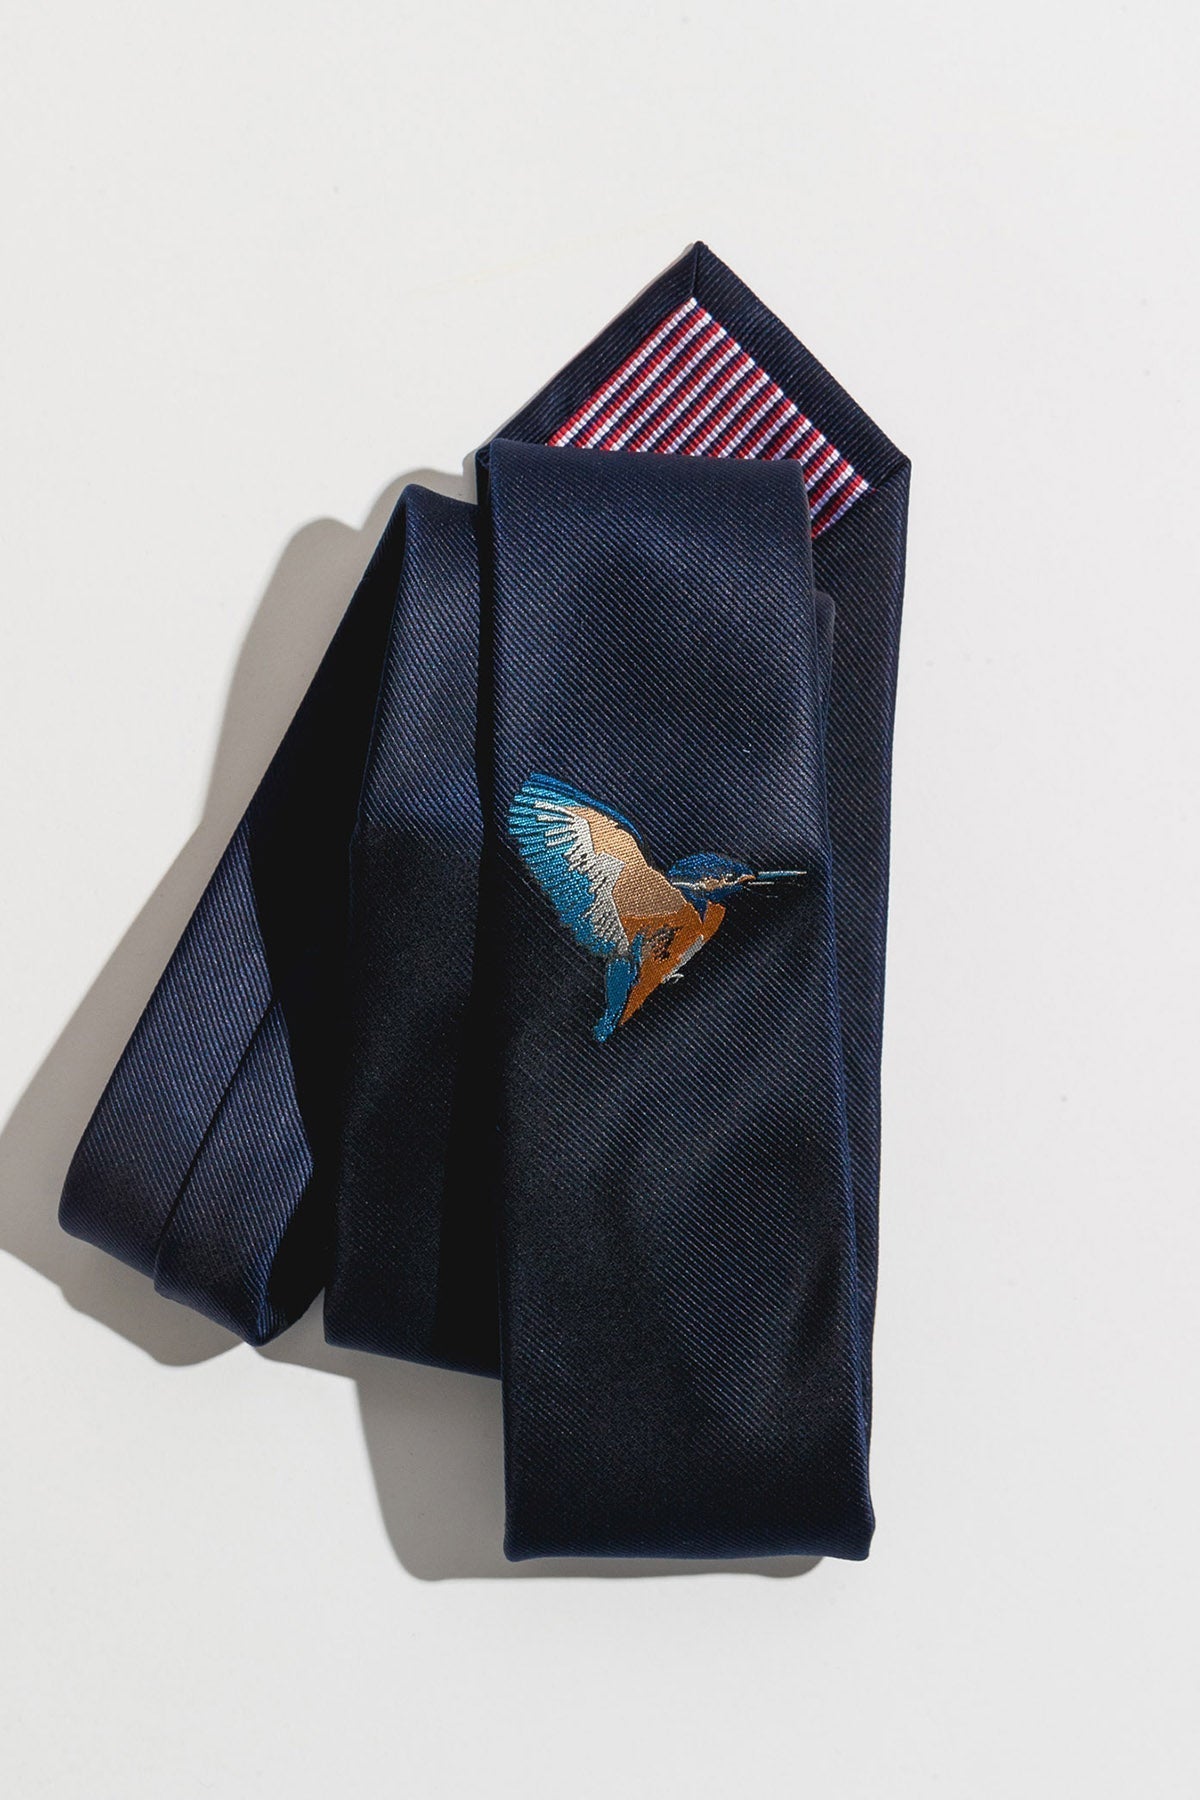 AN IVY Slips Navy Kingfisher Silk Tie